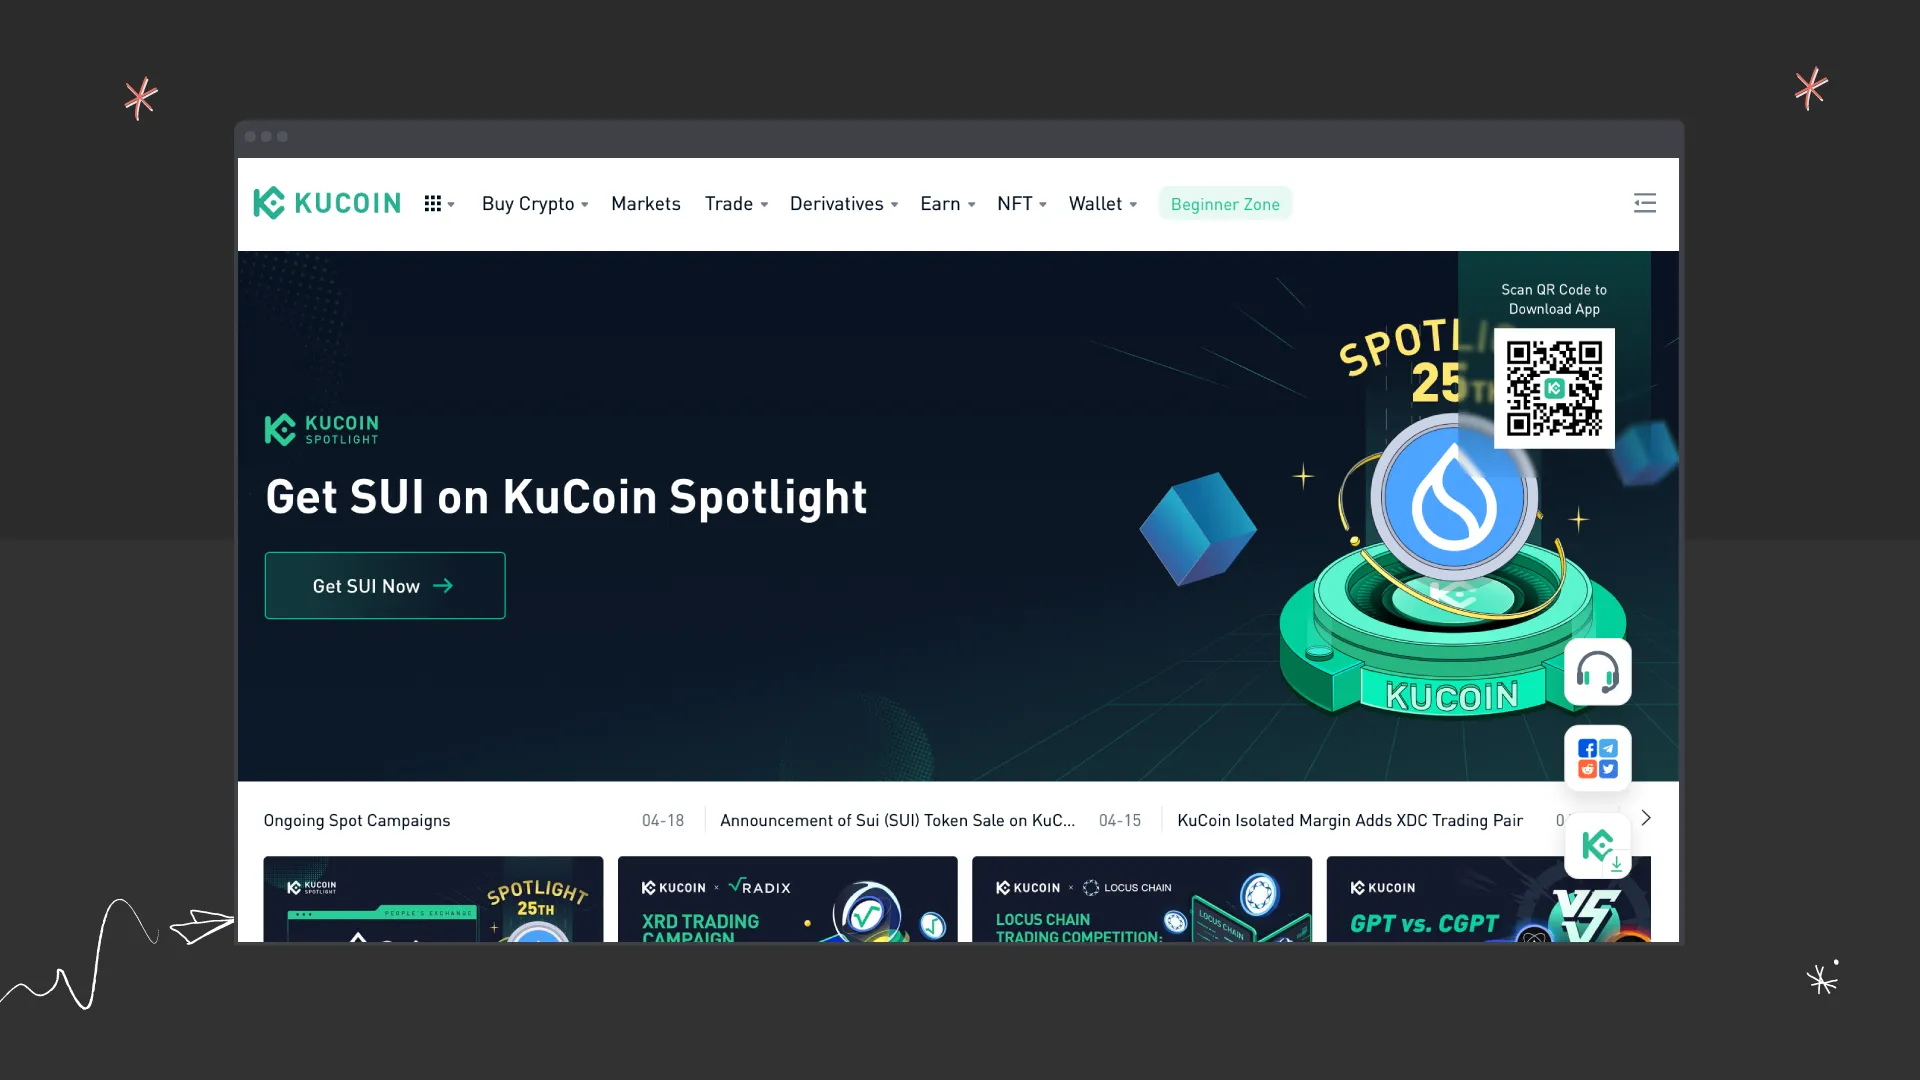 kucoin website design example